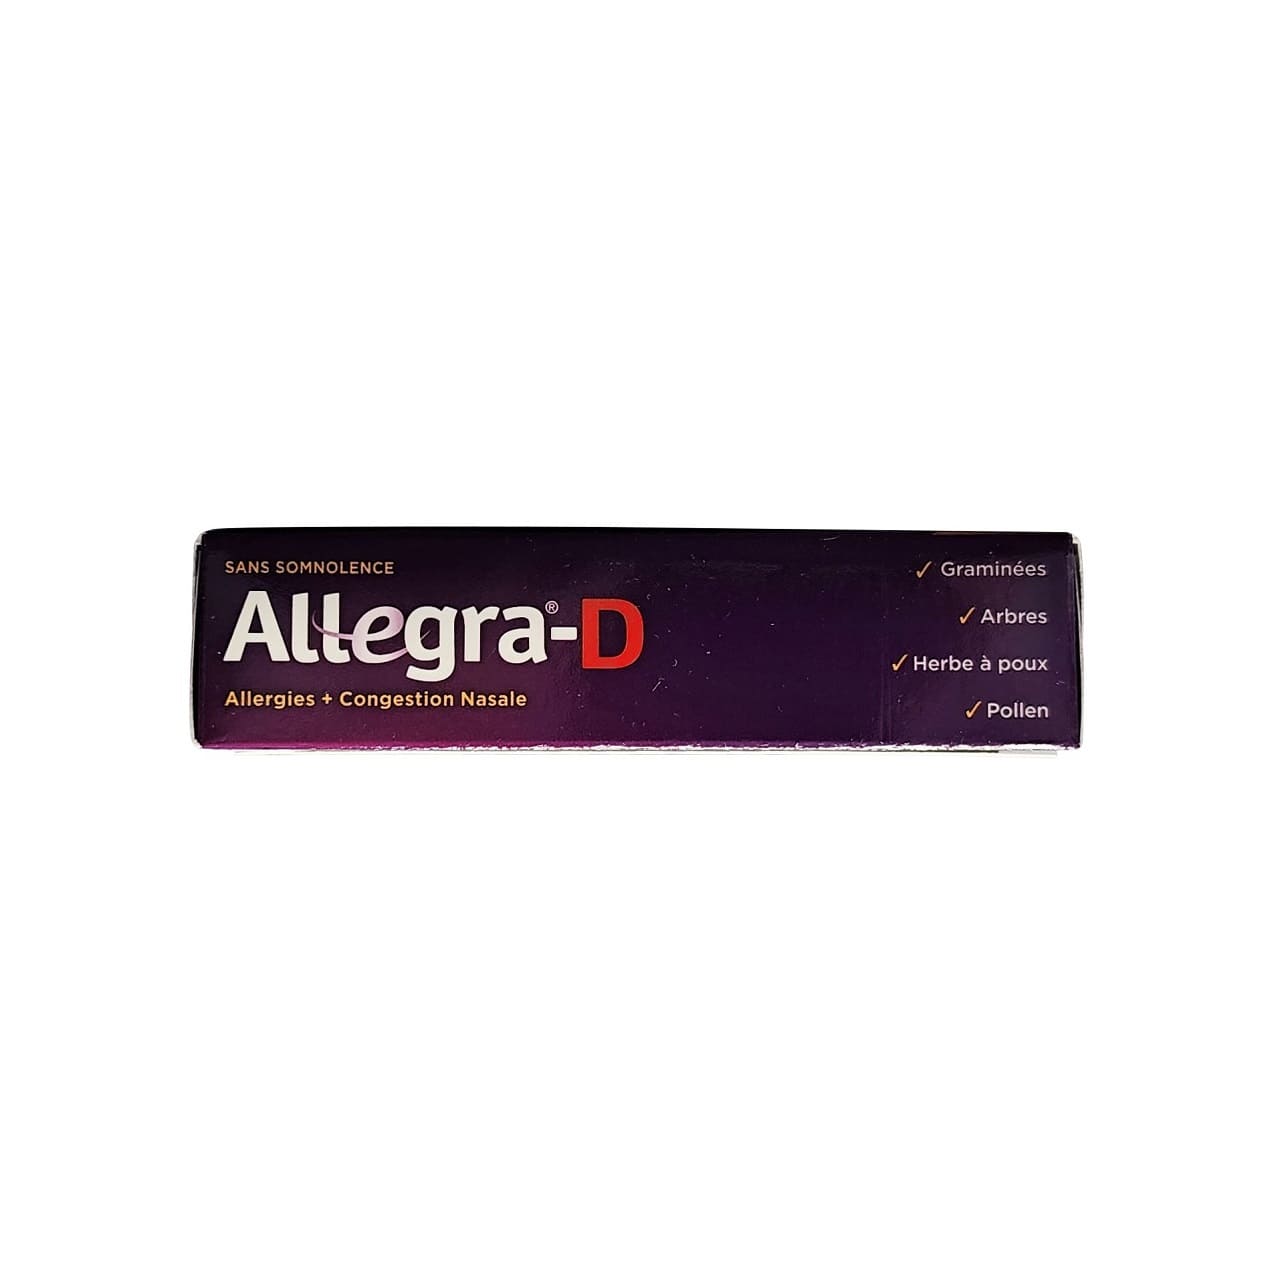 Side for Allegra-D Non Drowsy Antihistamine + Nasal Decongestant (20 caplets) in French